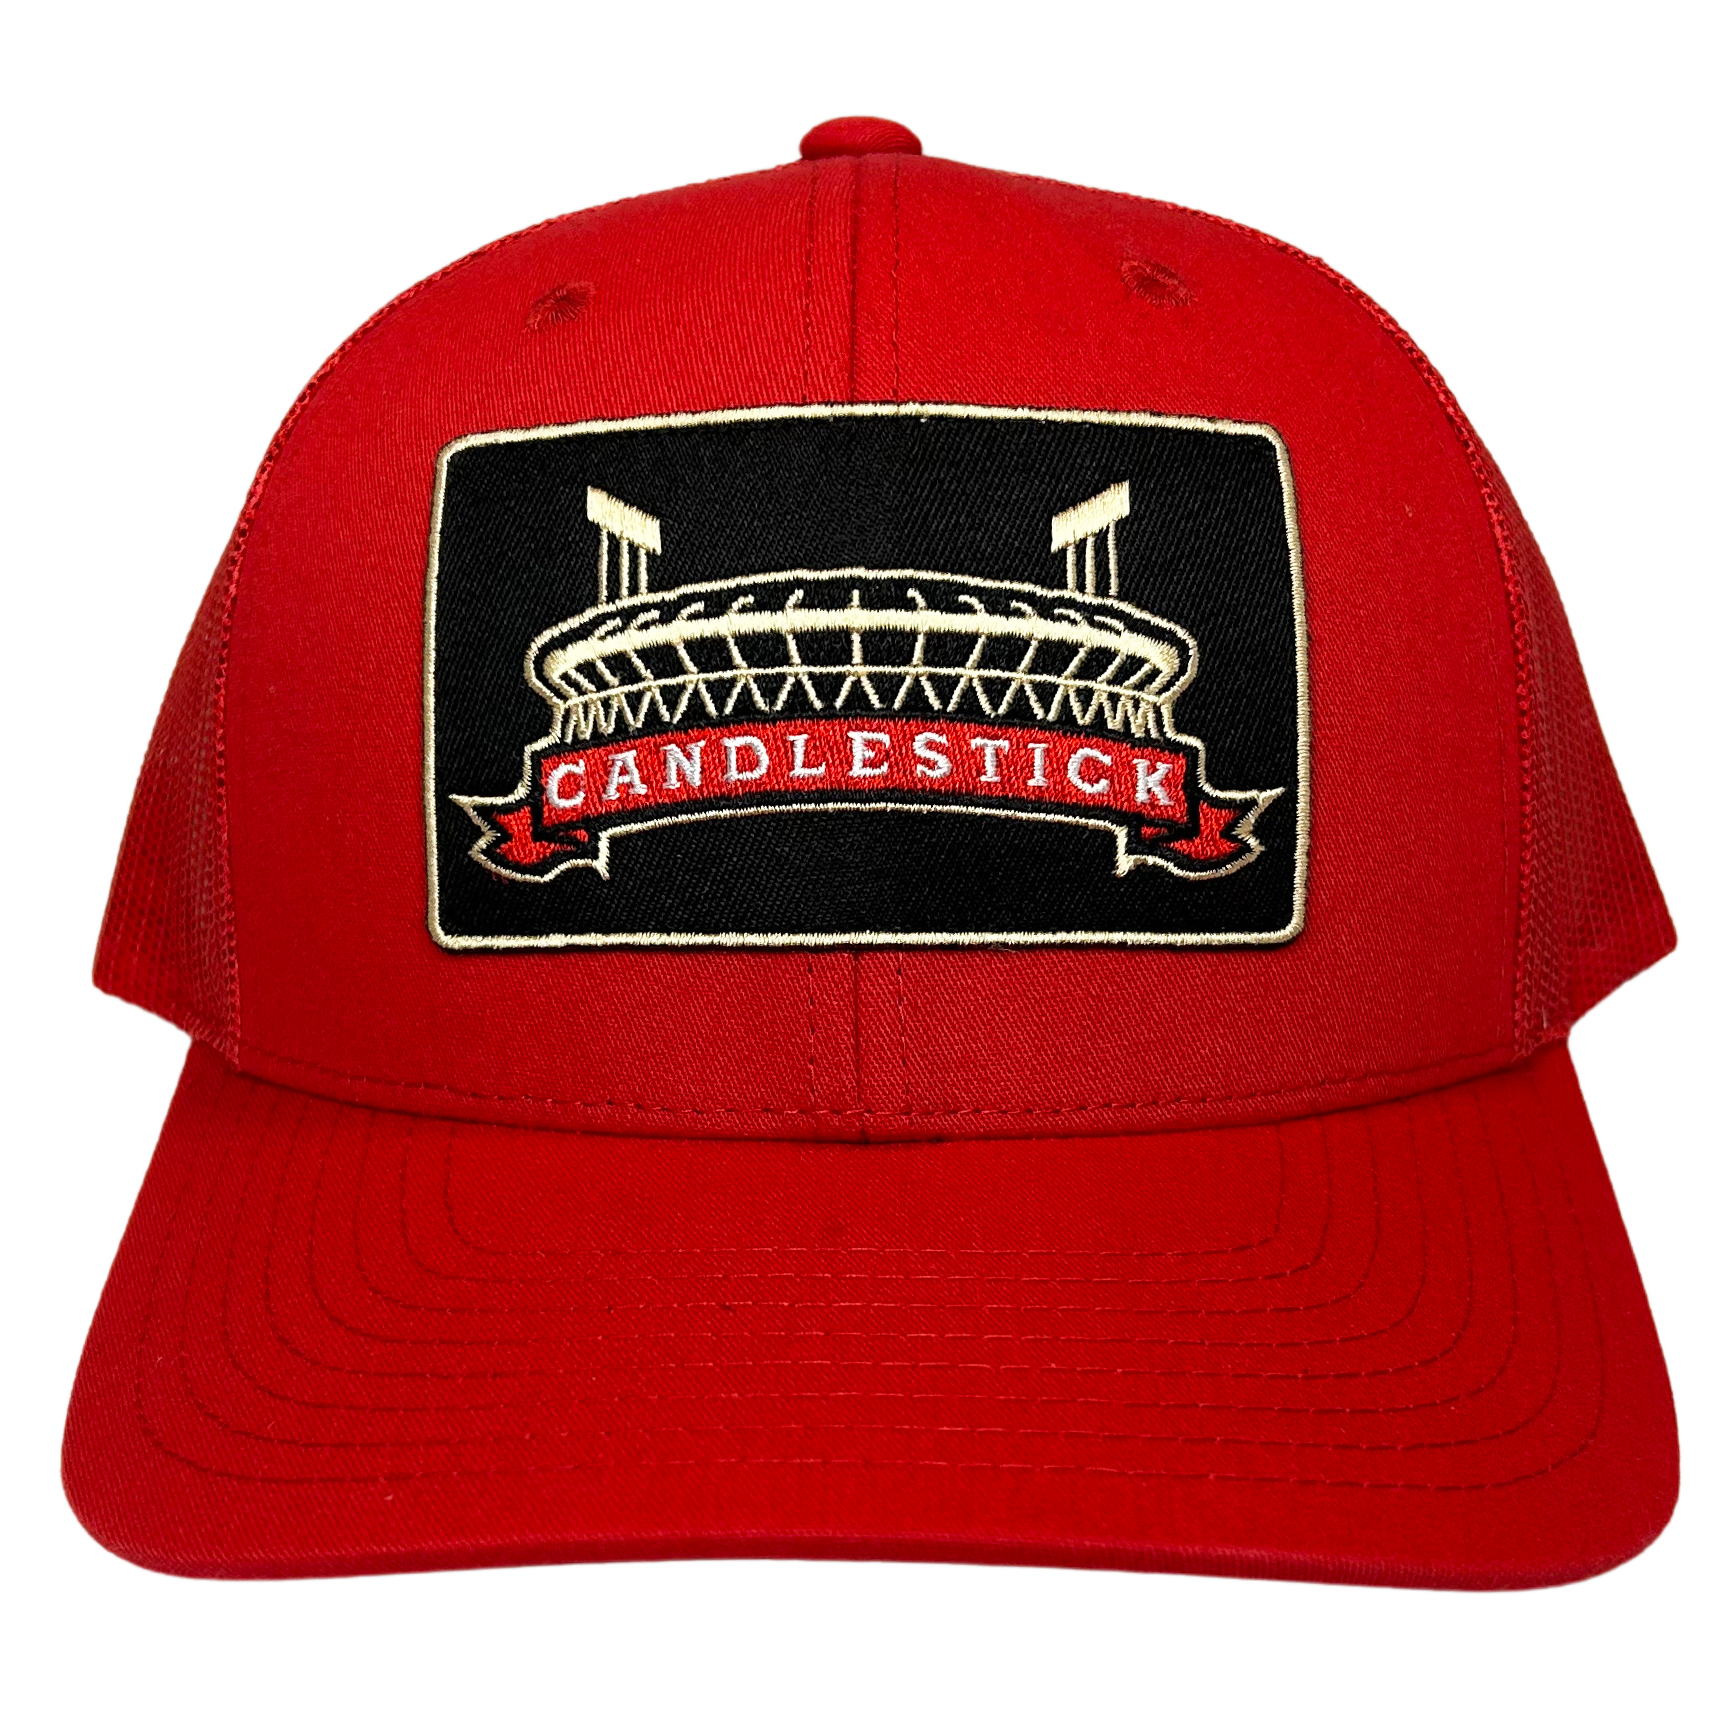 candlestick park trucker hat red 49ers